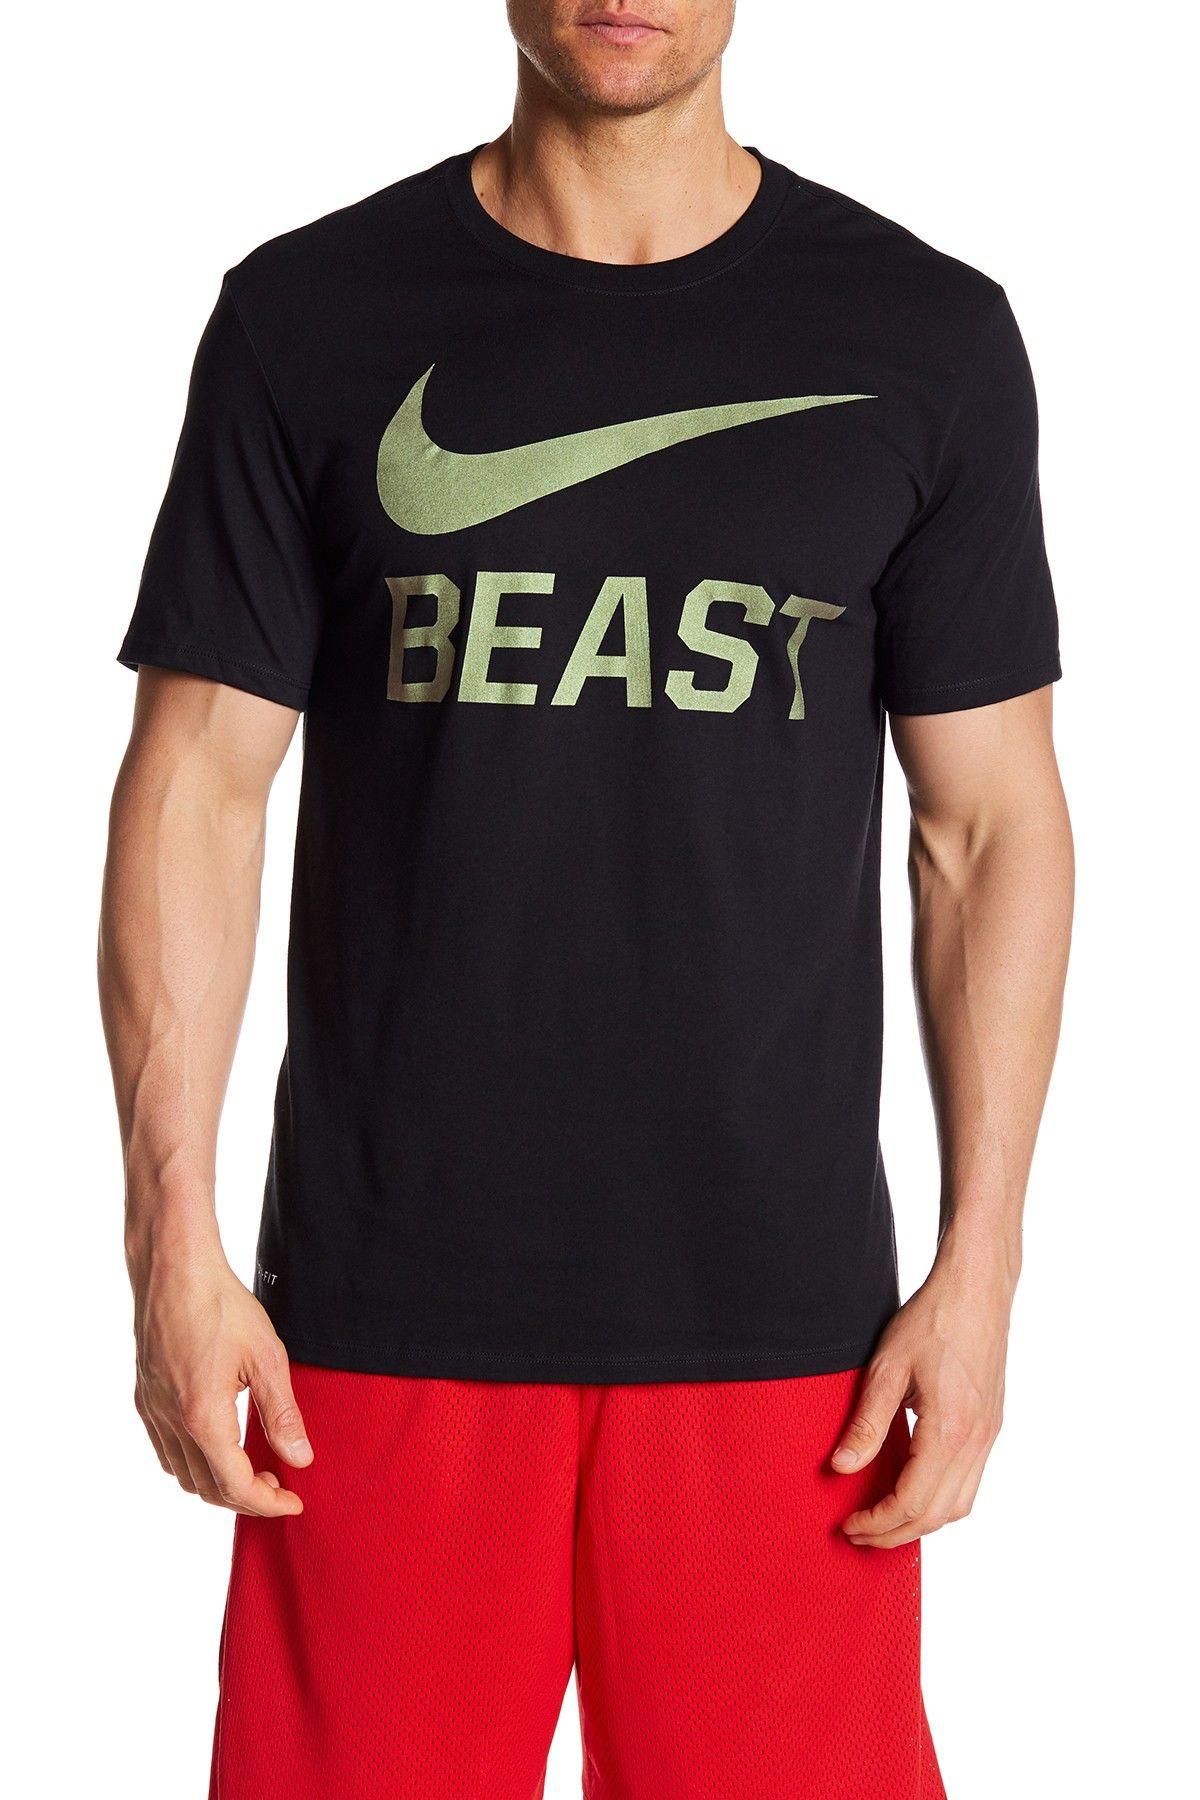 Nike Beast Logo - Nike. Swoosh Beast Athletic Cut Tee